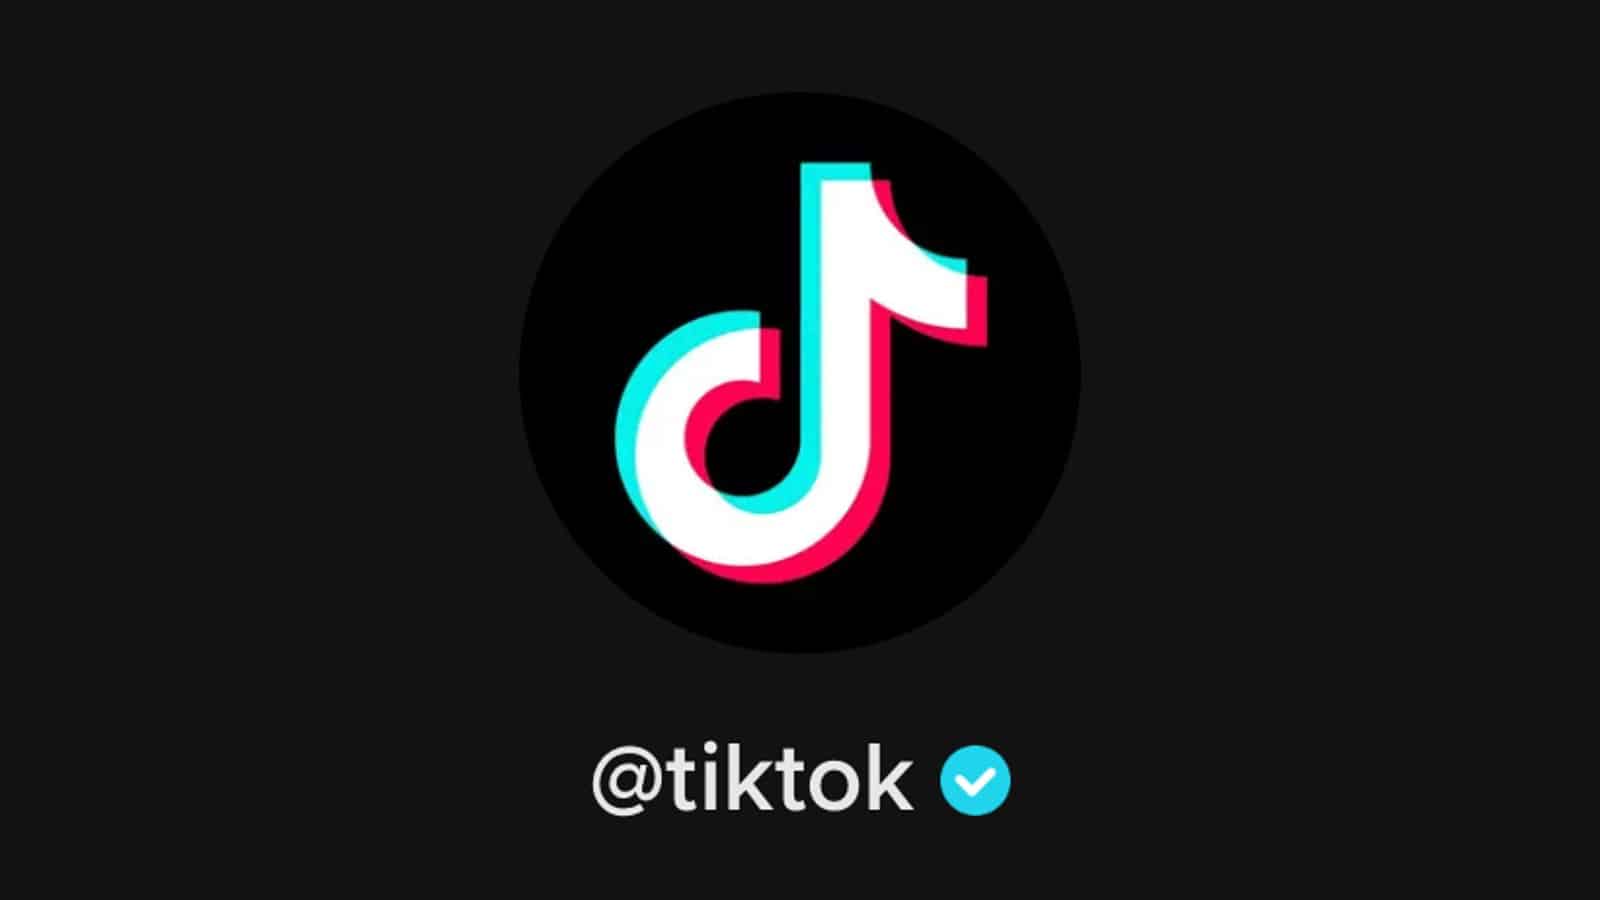 TikTok logo with the verified badge